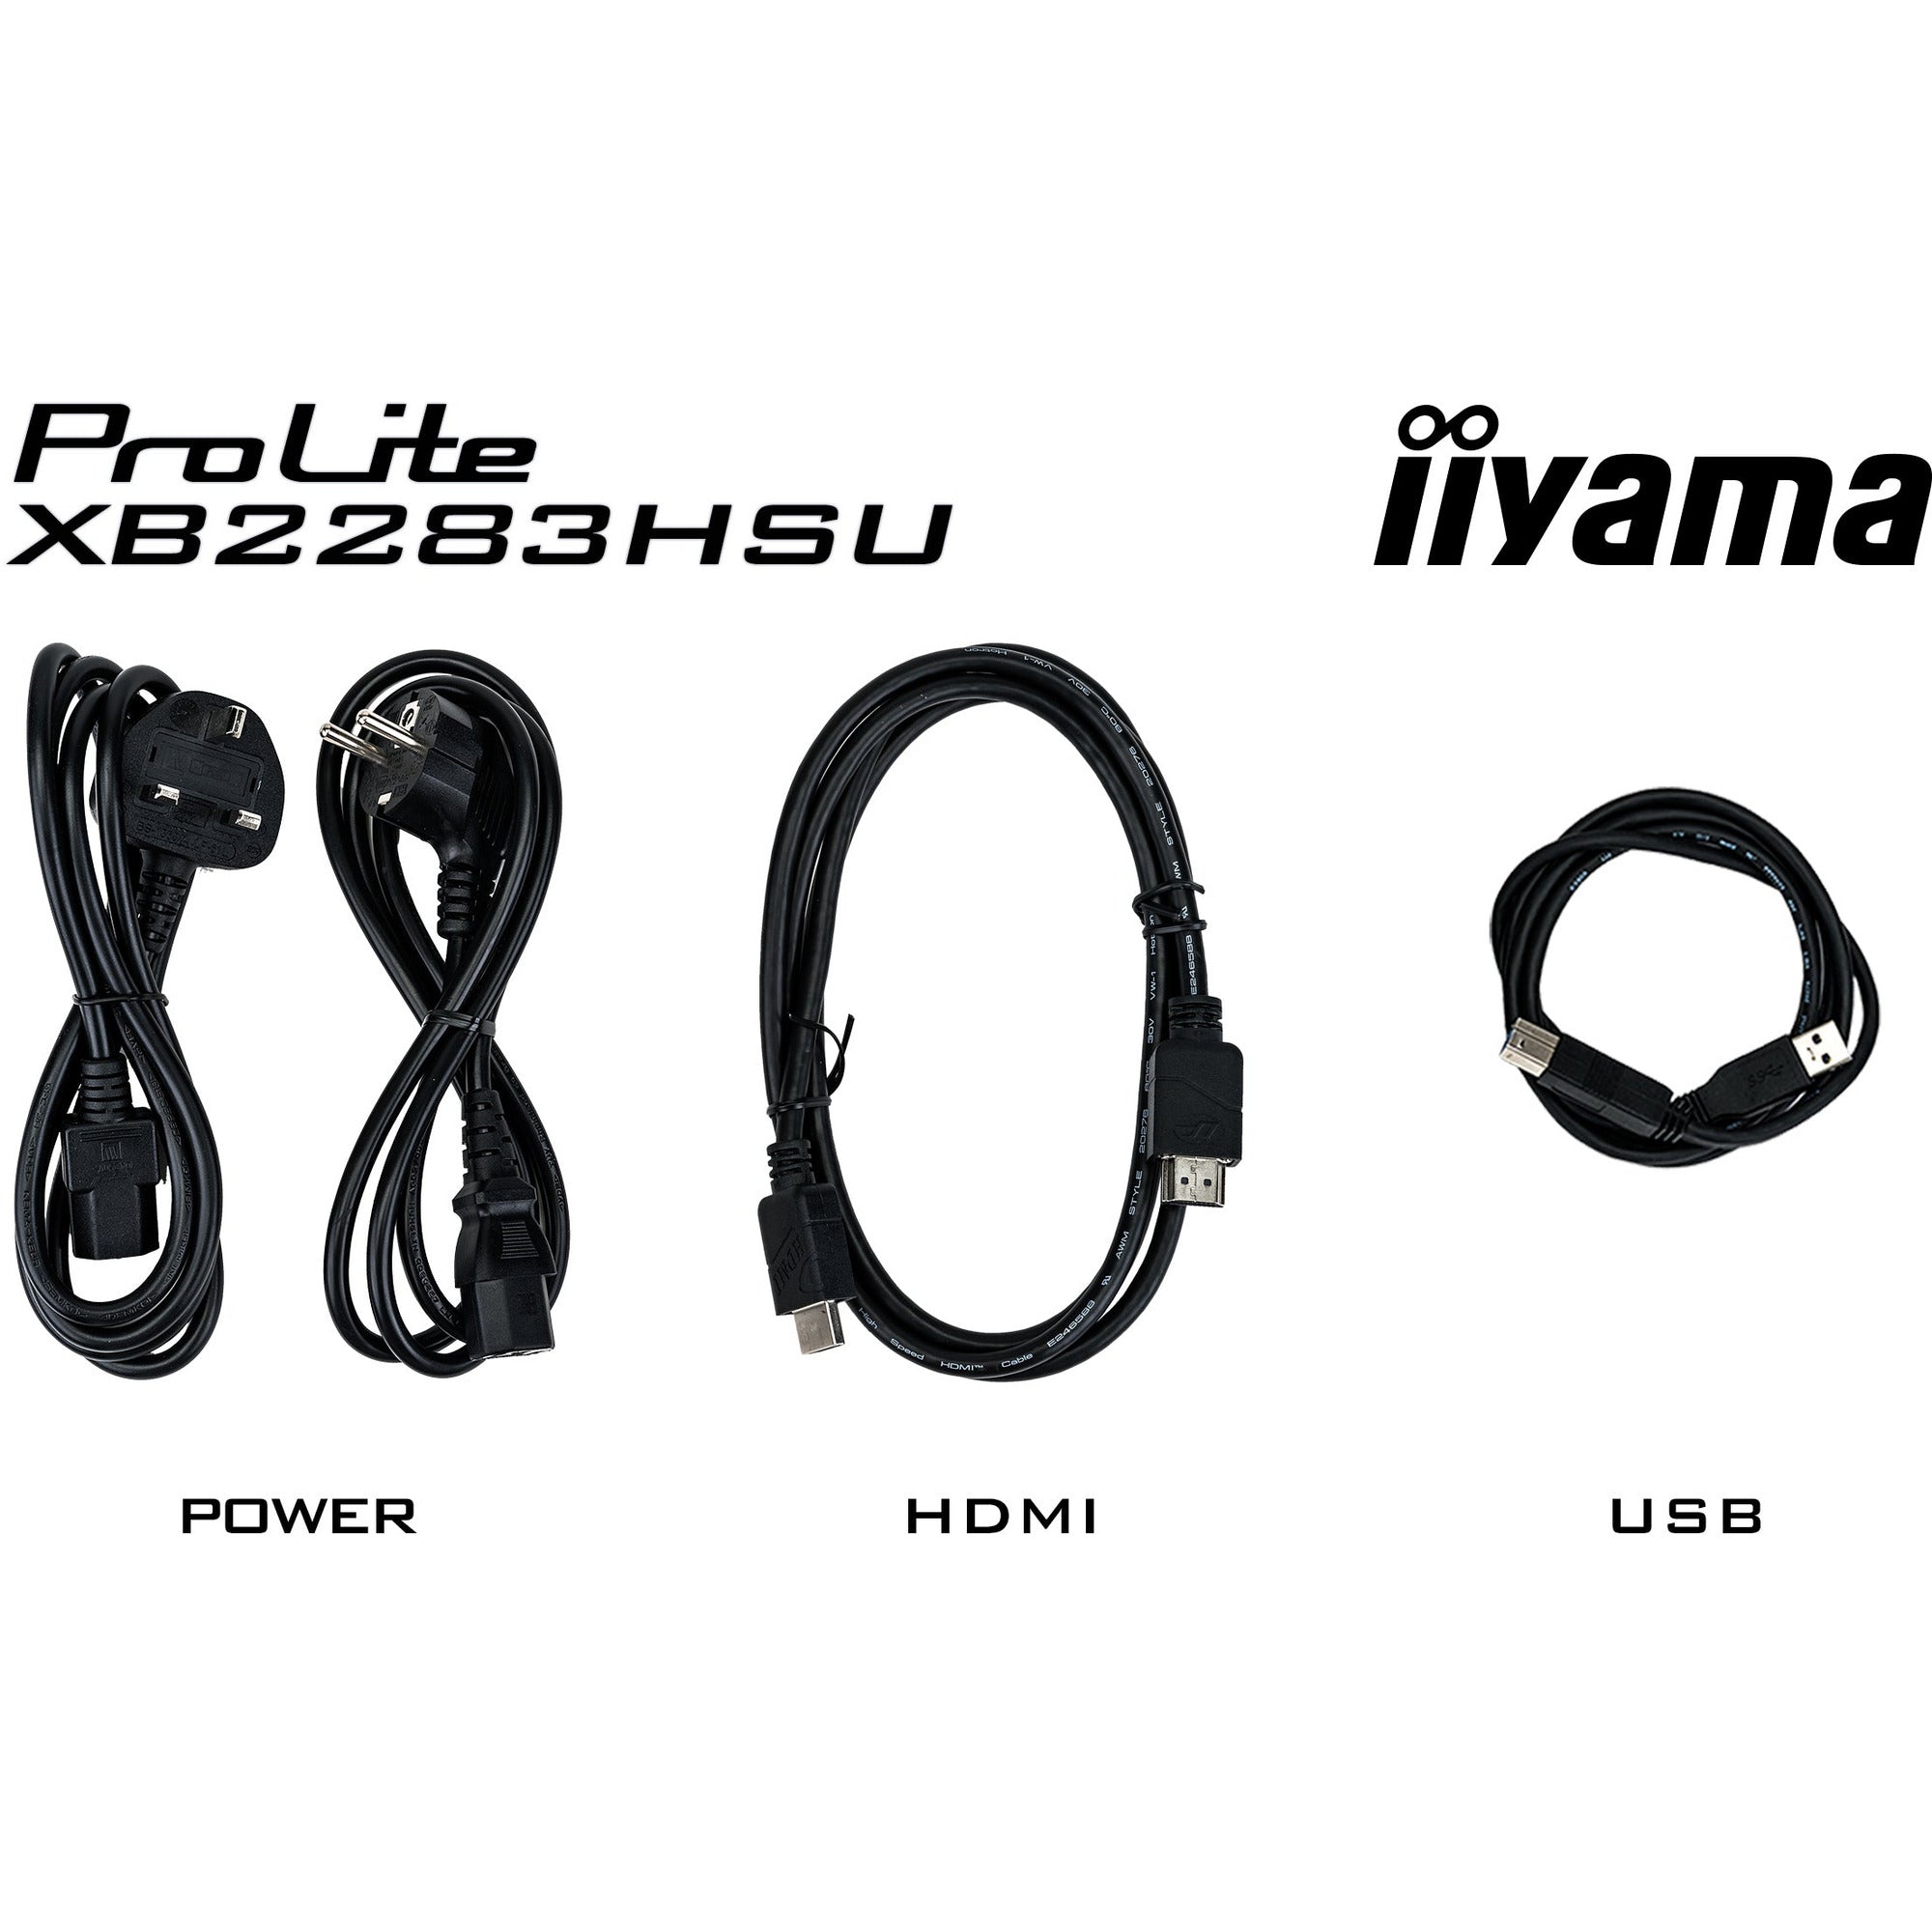 Iiyama ProLite XUB2494HSU-B2 24” Full HD monitor with VA panel and height adjustable stand